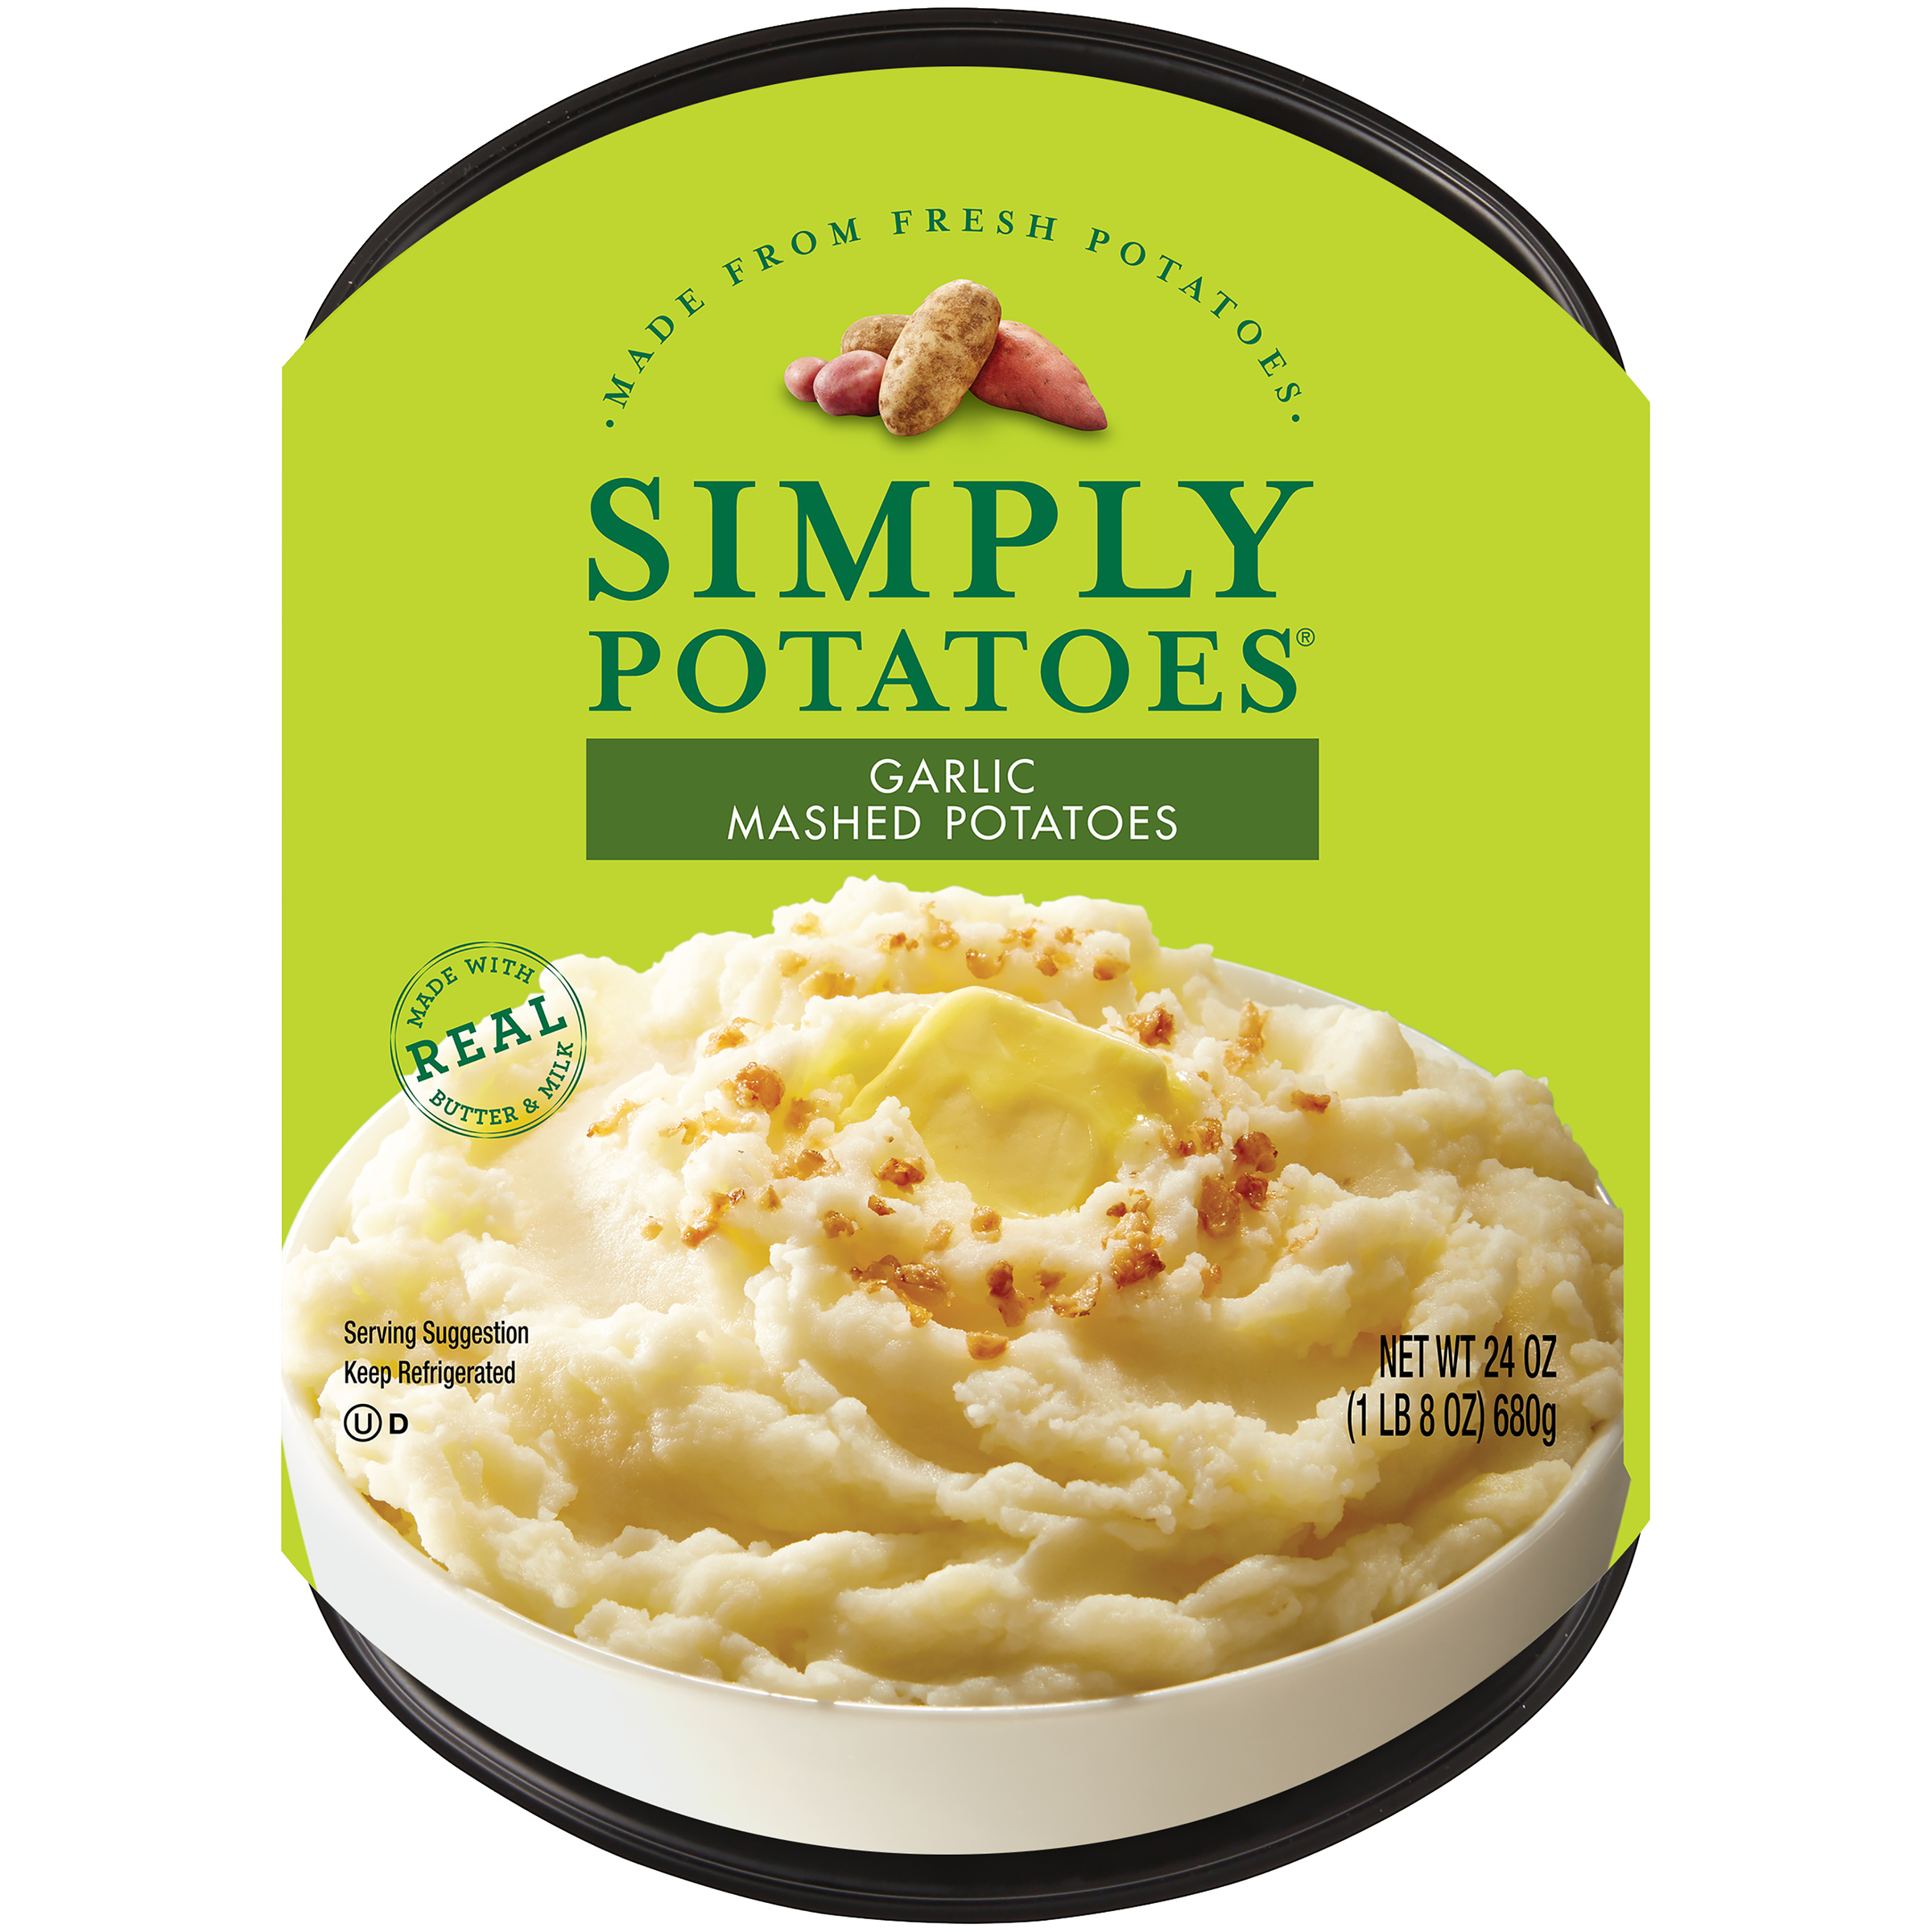 Simply Potatoes Garlic Mashed Potatoes product image